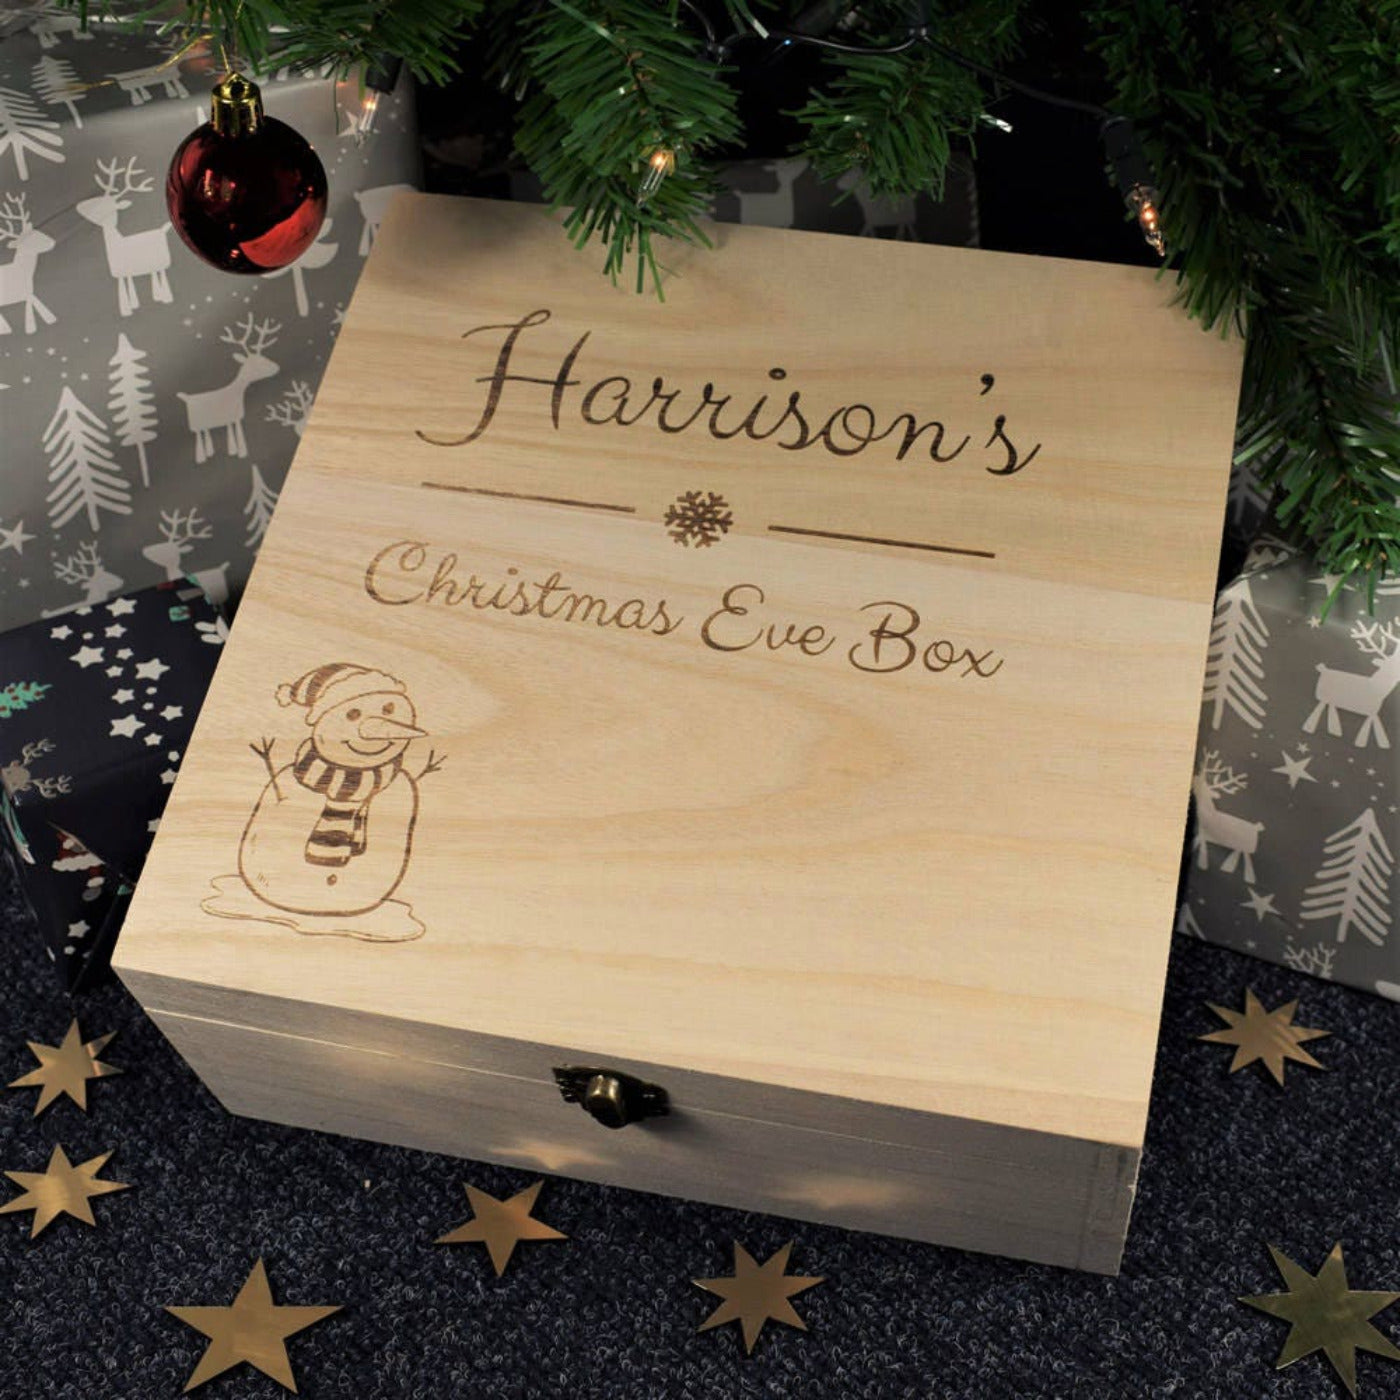 Christmas Eve Box - Festive Snowman Design